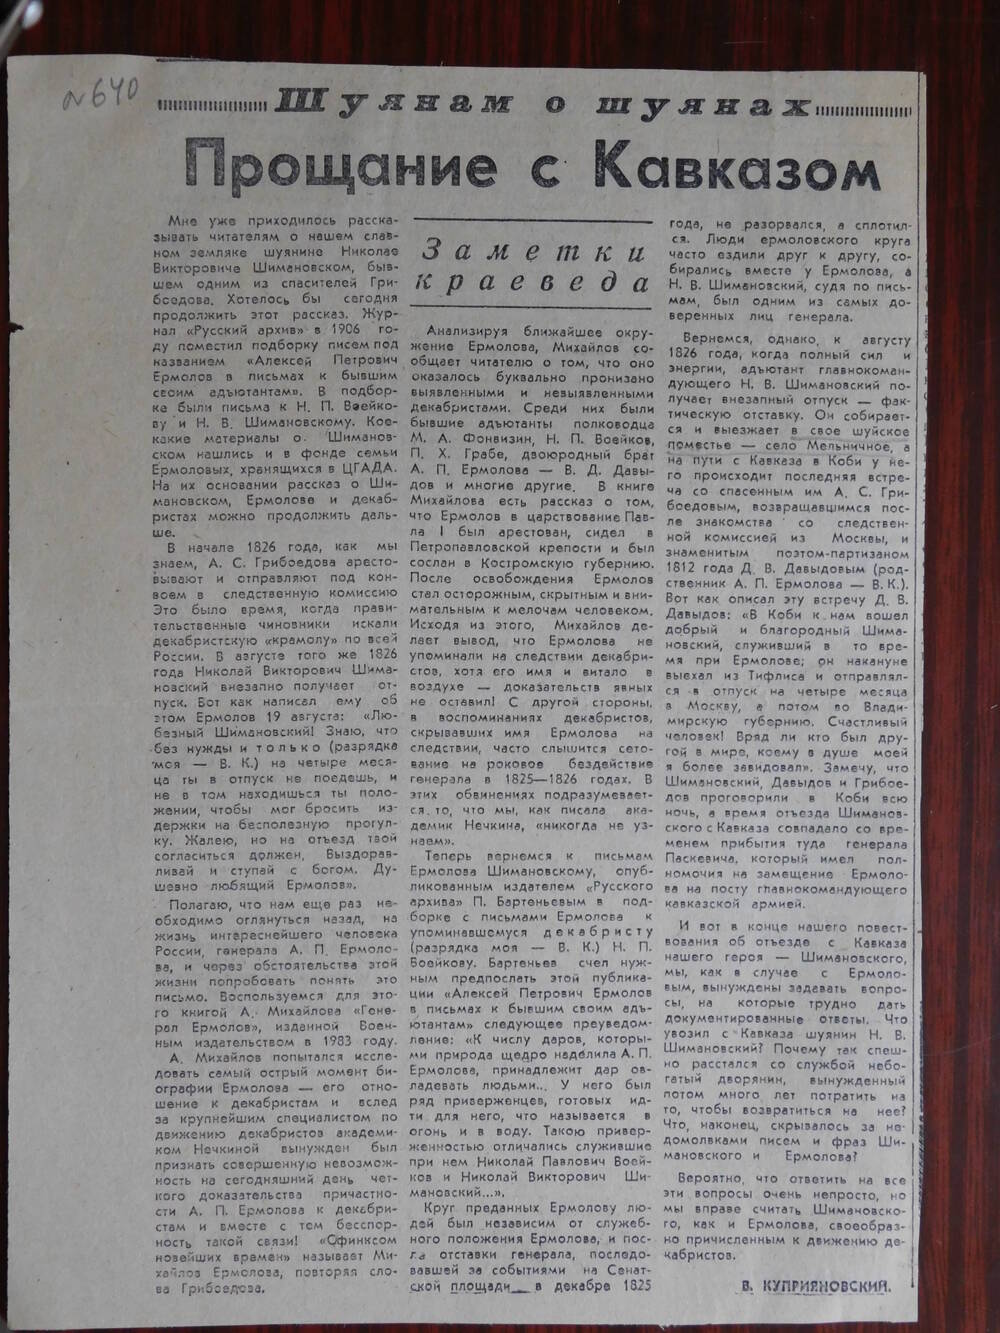 Фрагмент газеты Знамя коммунизма № 142 от 6.09.1986 г. Ст. В. Куприяновский. Прощание с Кавказом. Шуя.